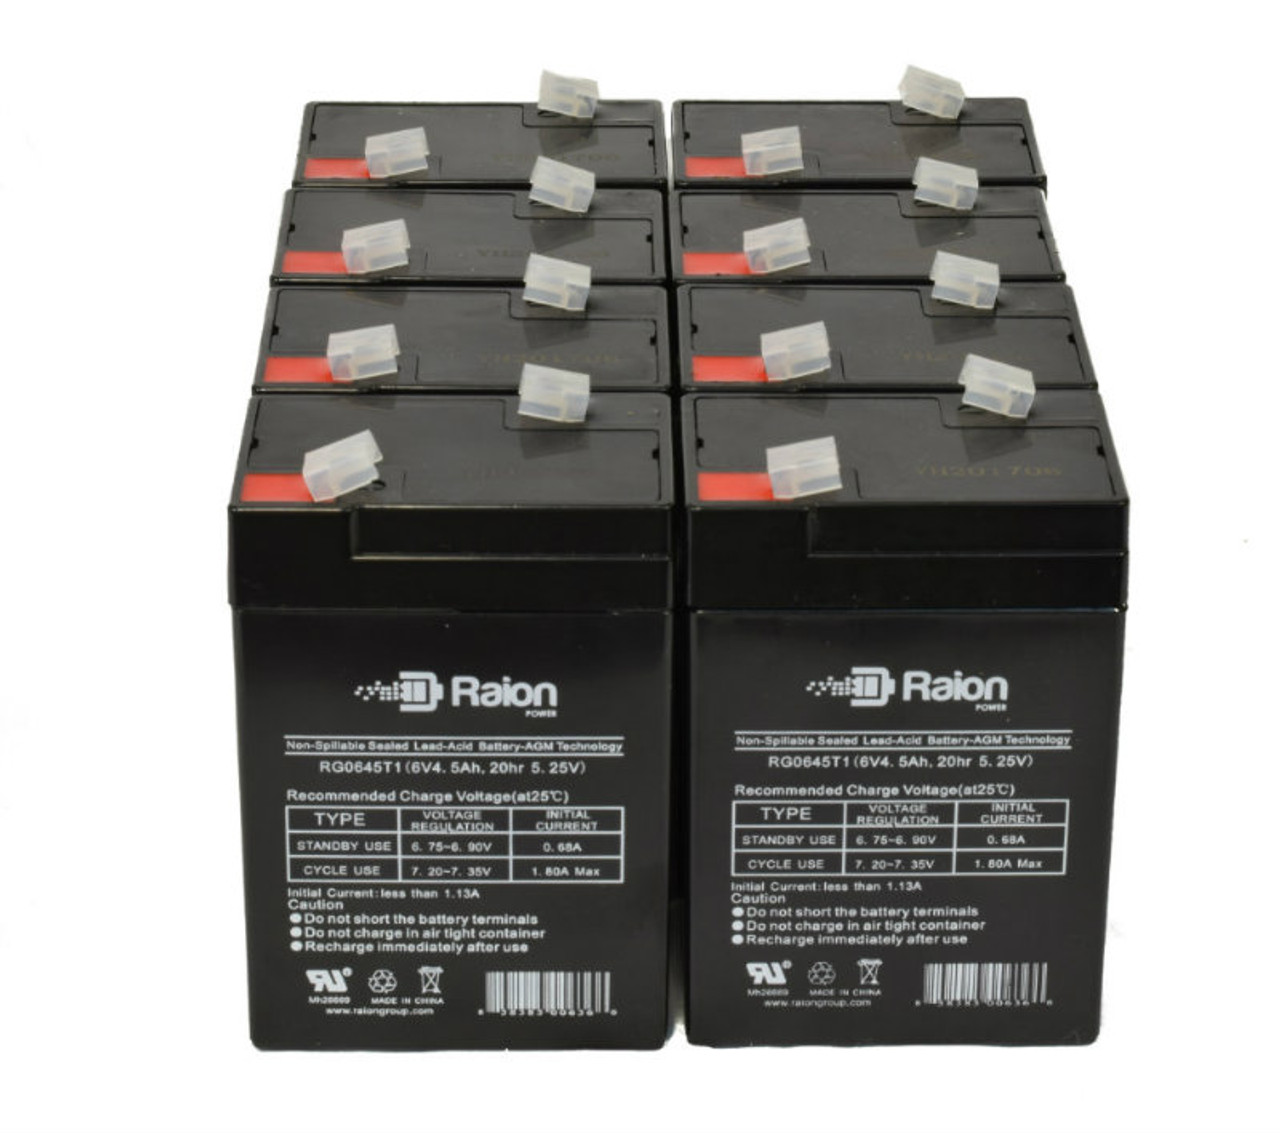 Raion Power 6 Volt 4.5Ah RG0645T1 Replacement Battery for Wangpin 3FM5.5 - 8 Pack